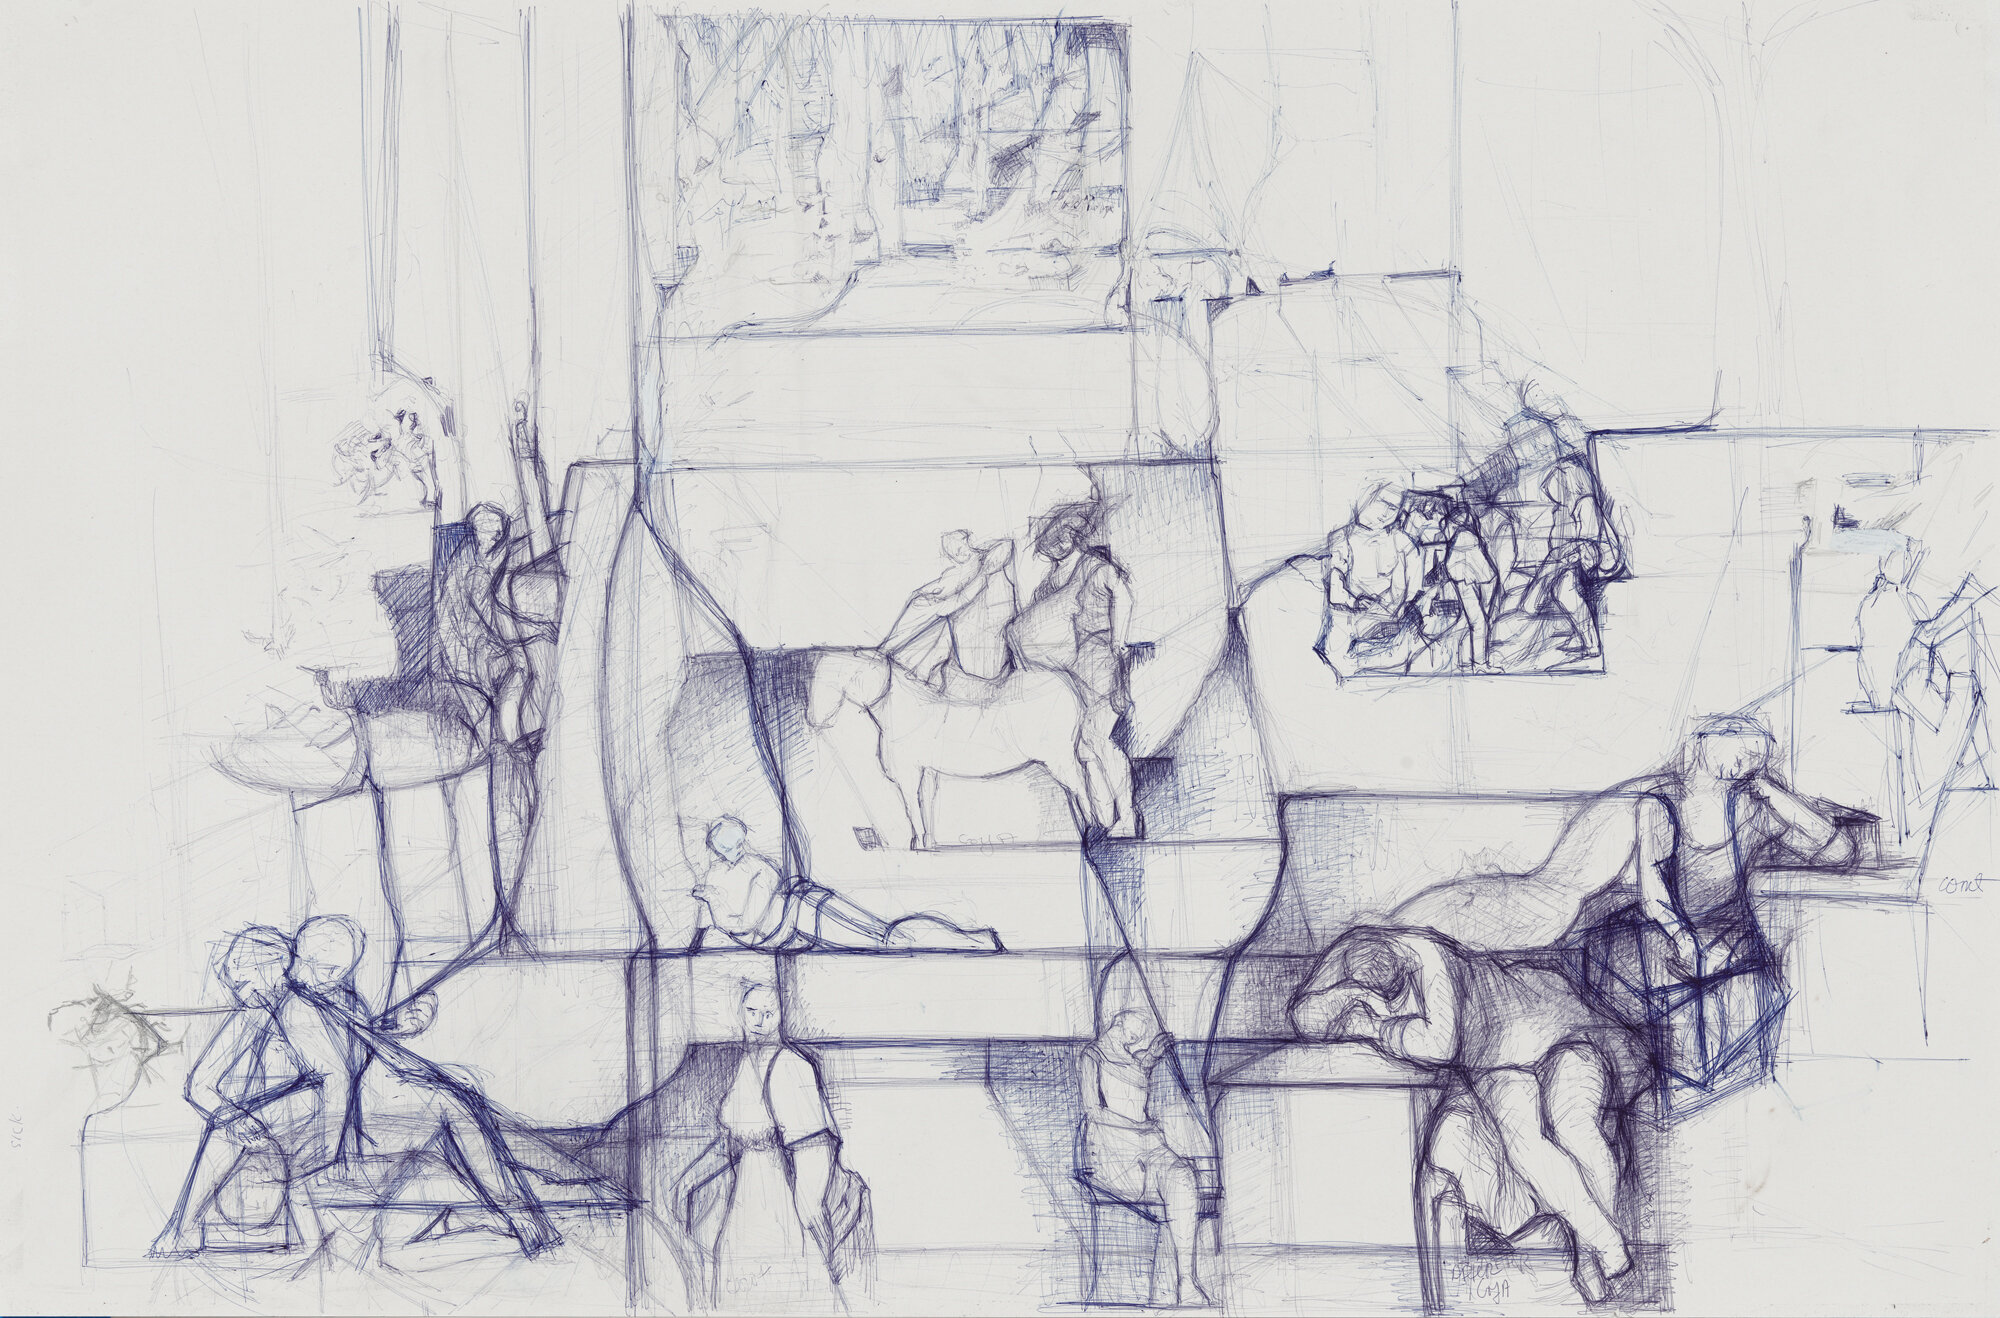  Sketch, 2019, ballpoint pen on paper, 35”x23” 